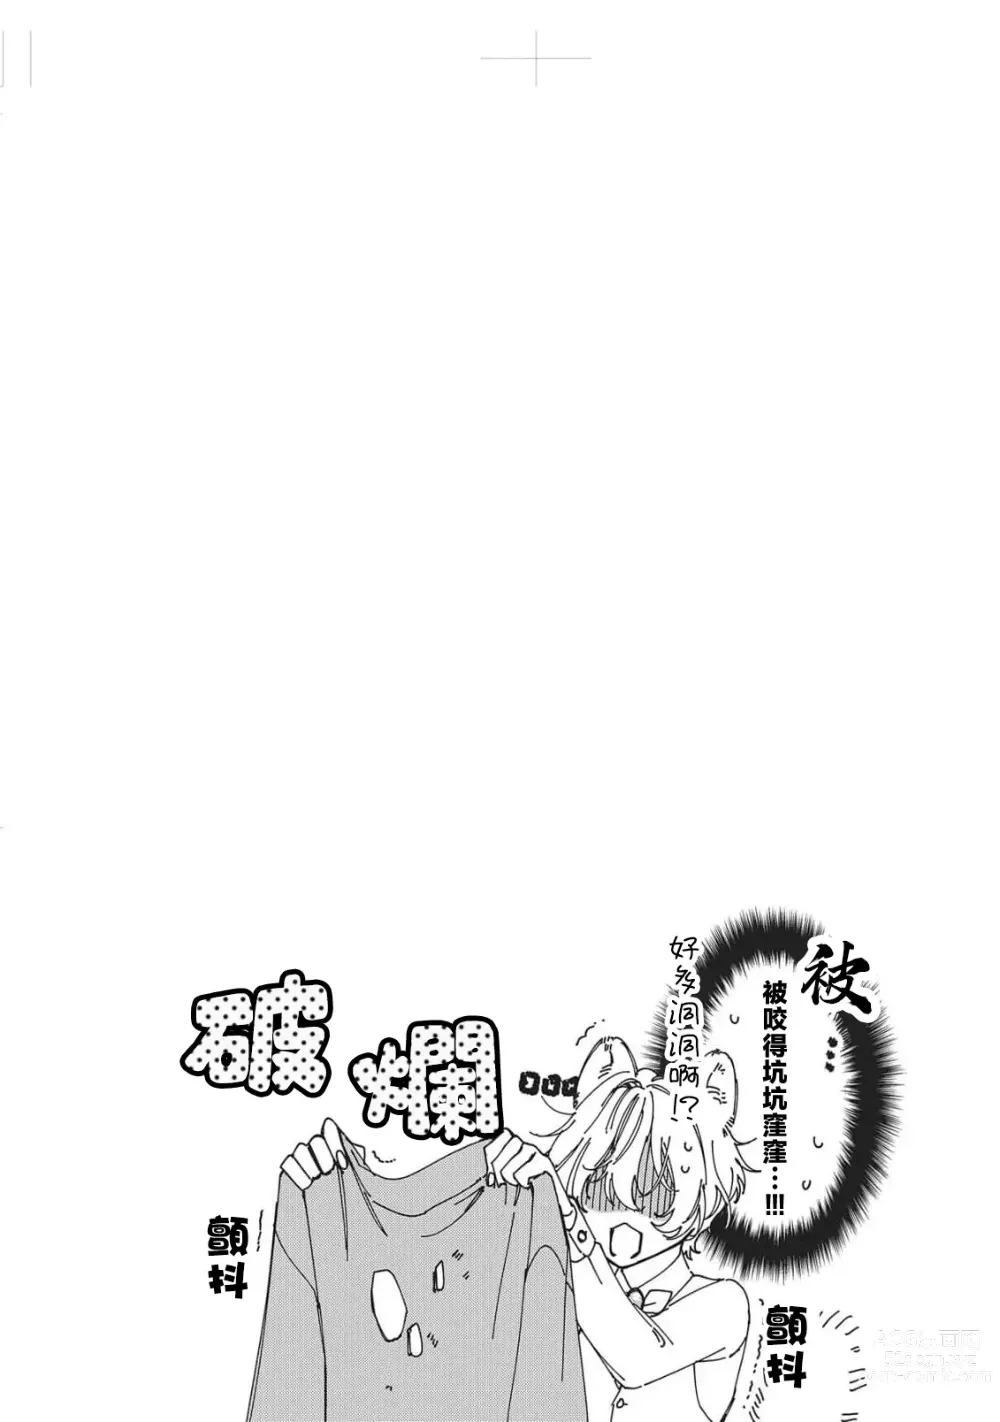 Page 4 of manga 无可奈何花落去 只叹道，命运使然 番外